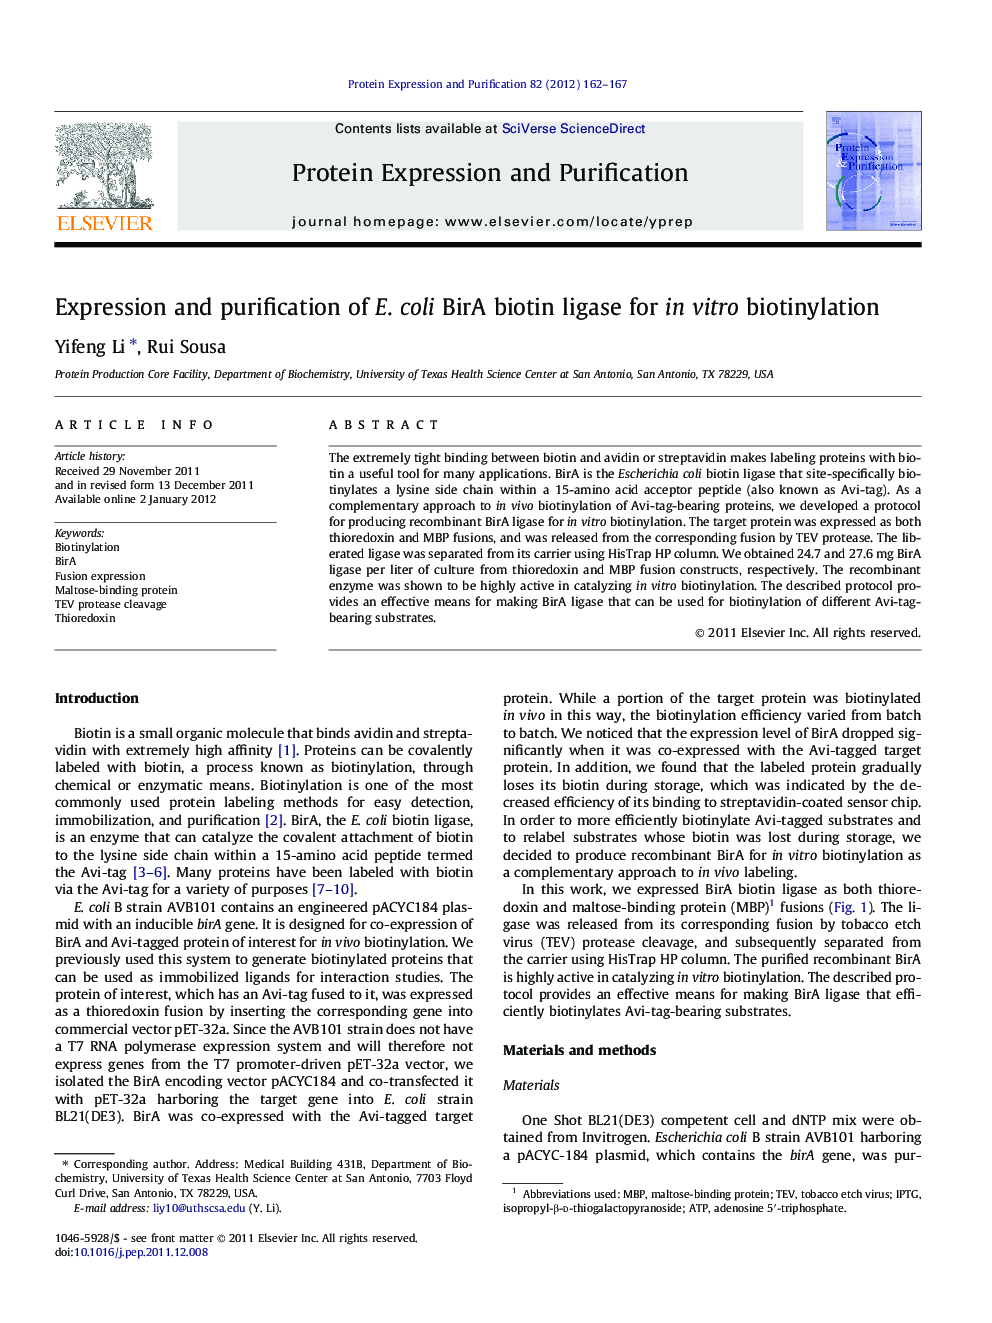 Expression and purification of E. coli BirA biotin ligase for in vitro biotinylation